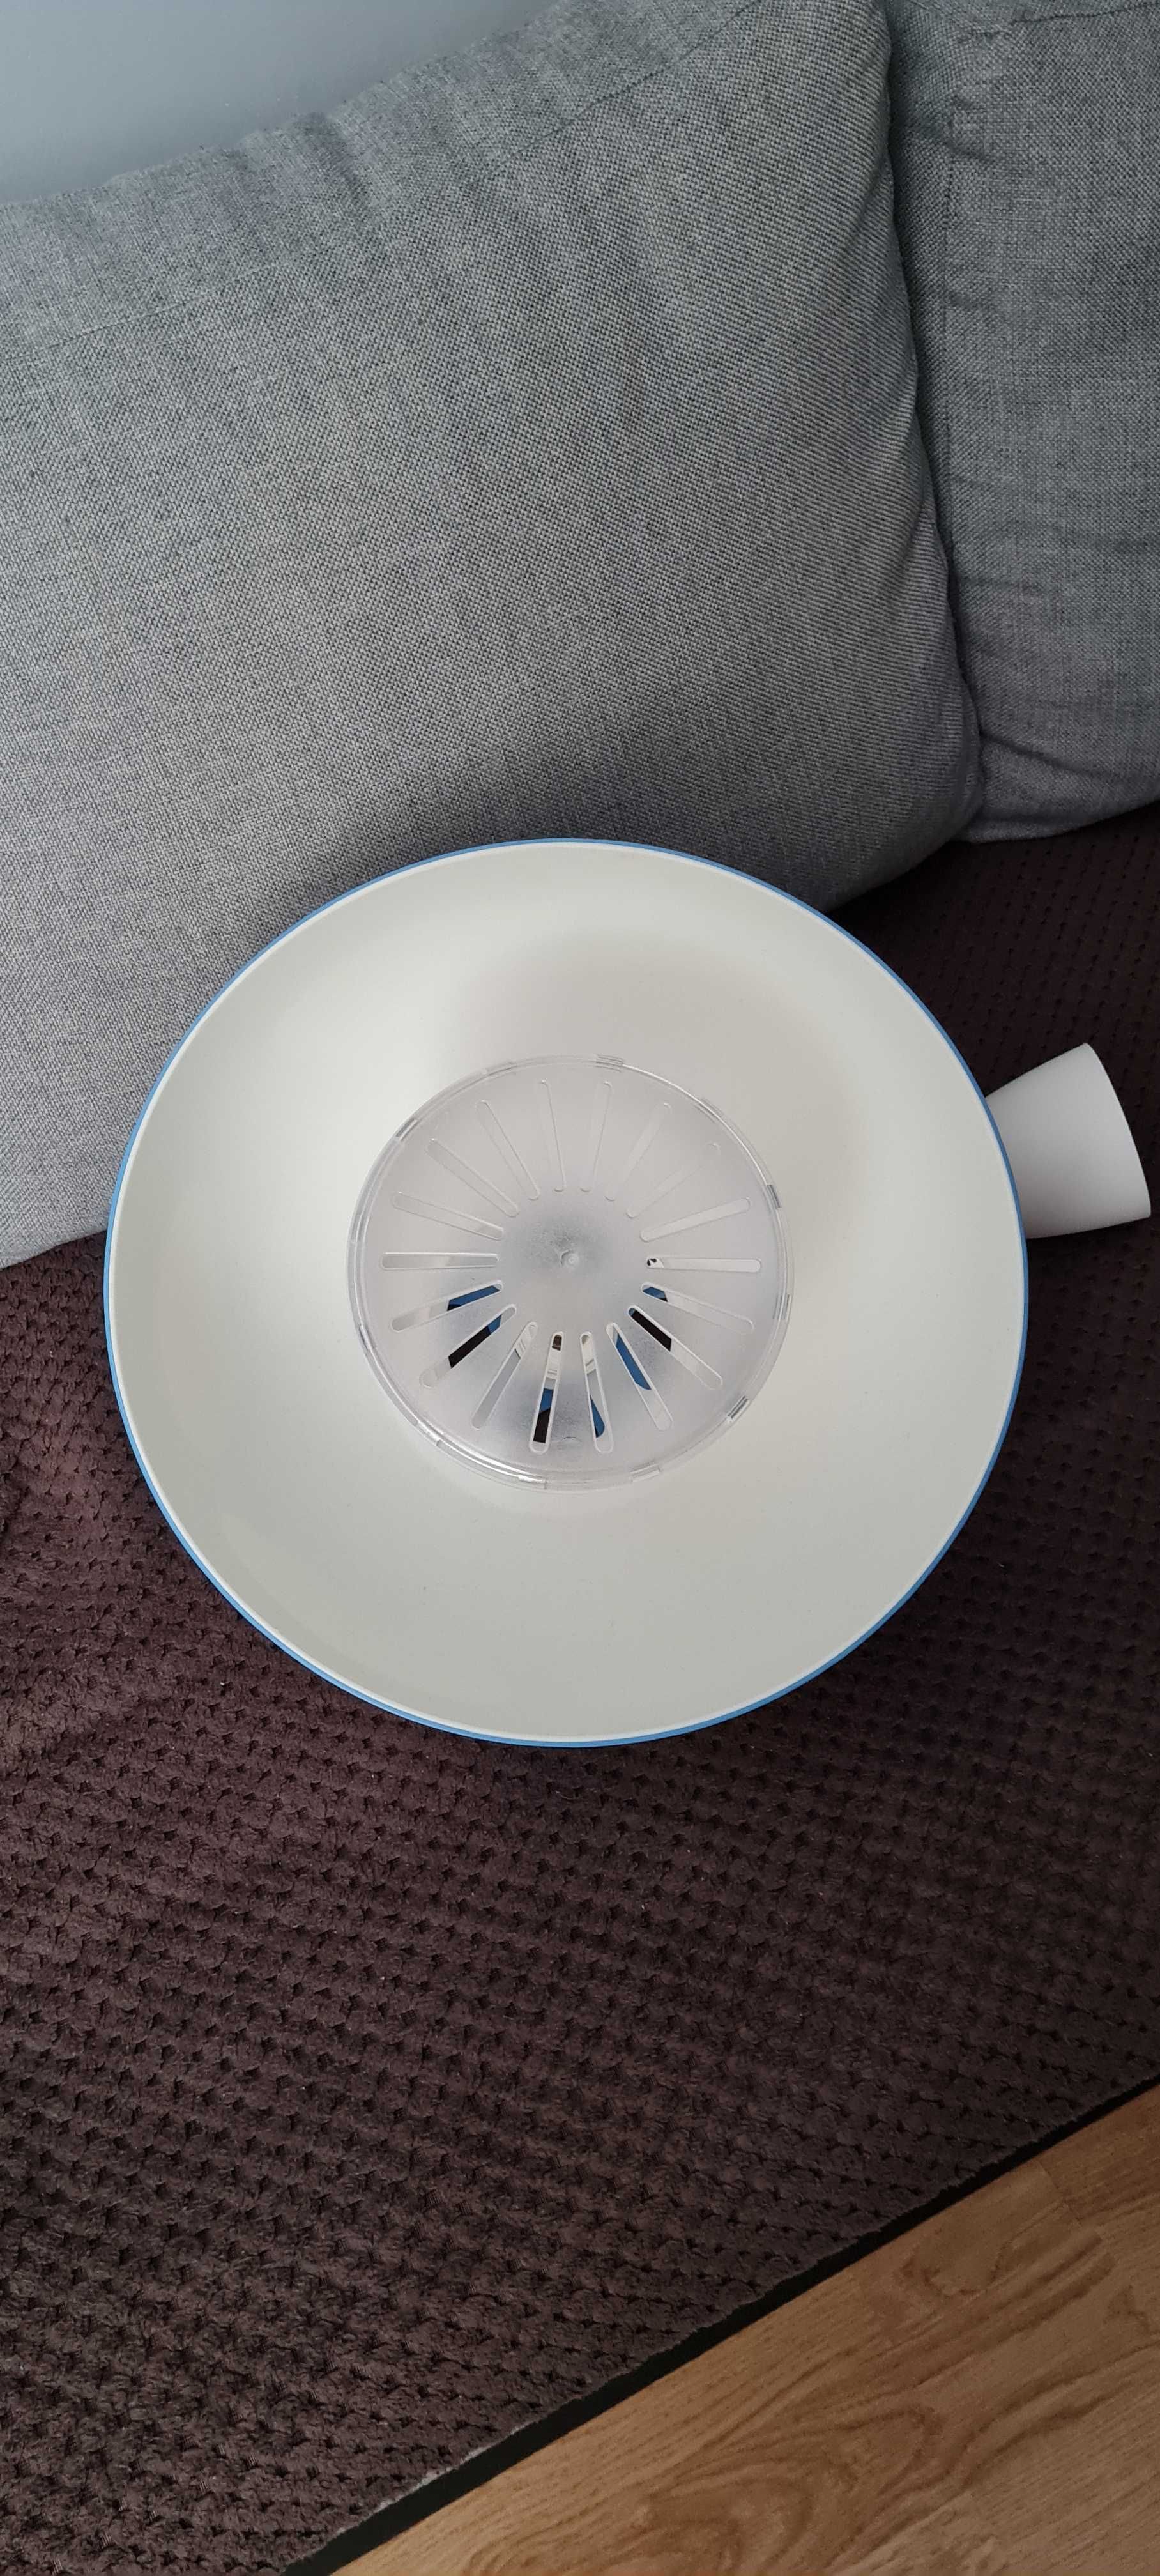 Lampa sufitowa Ikea Skojig chmurki